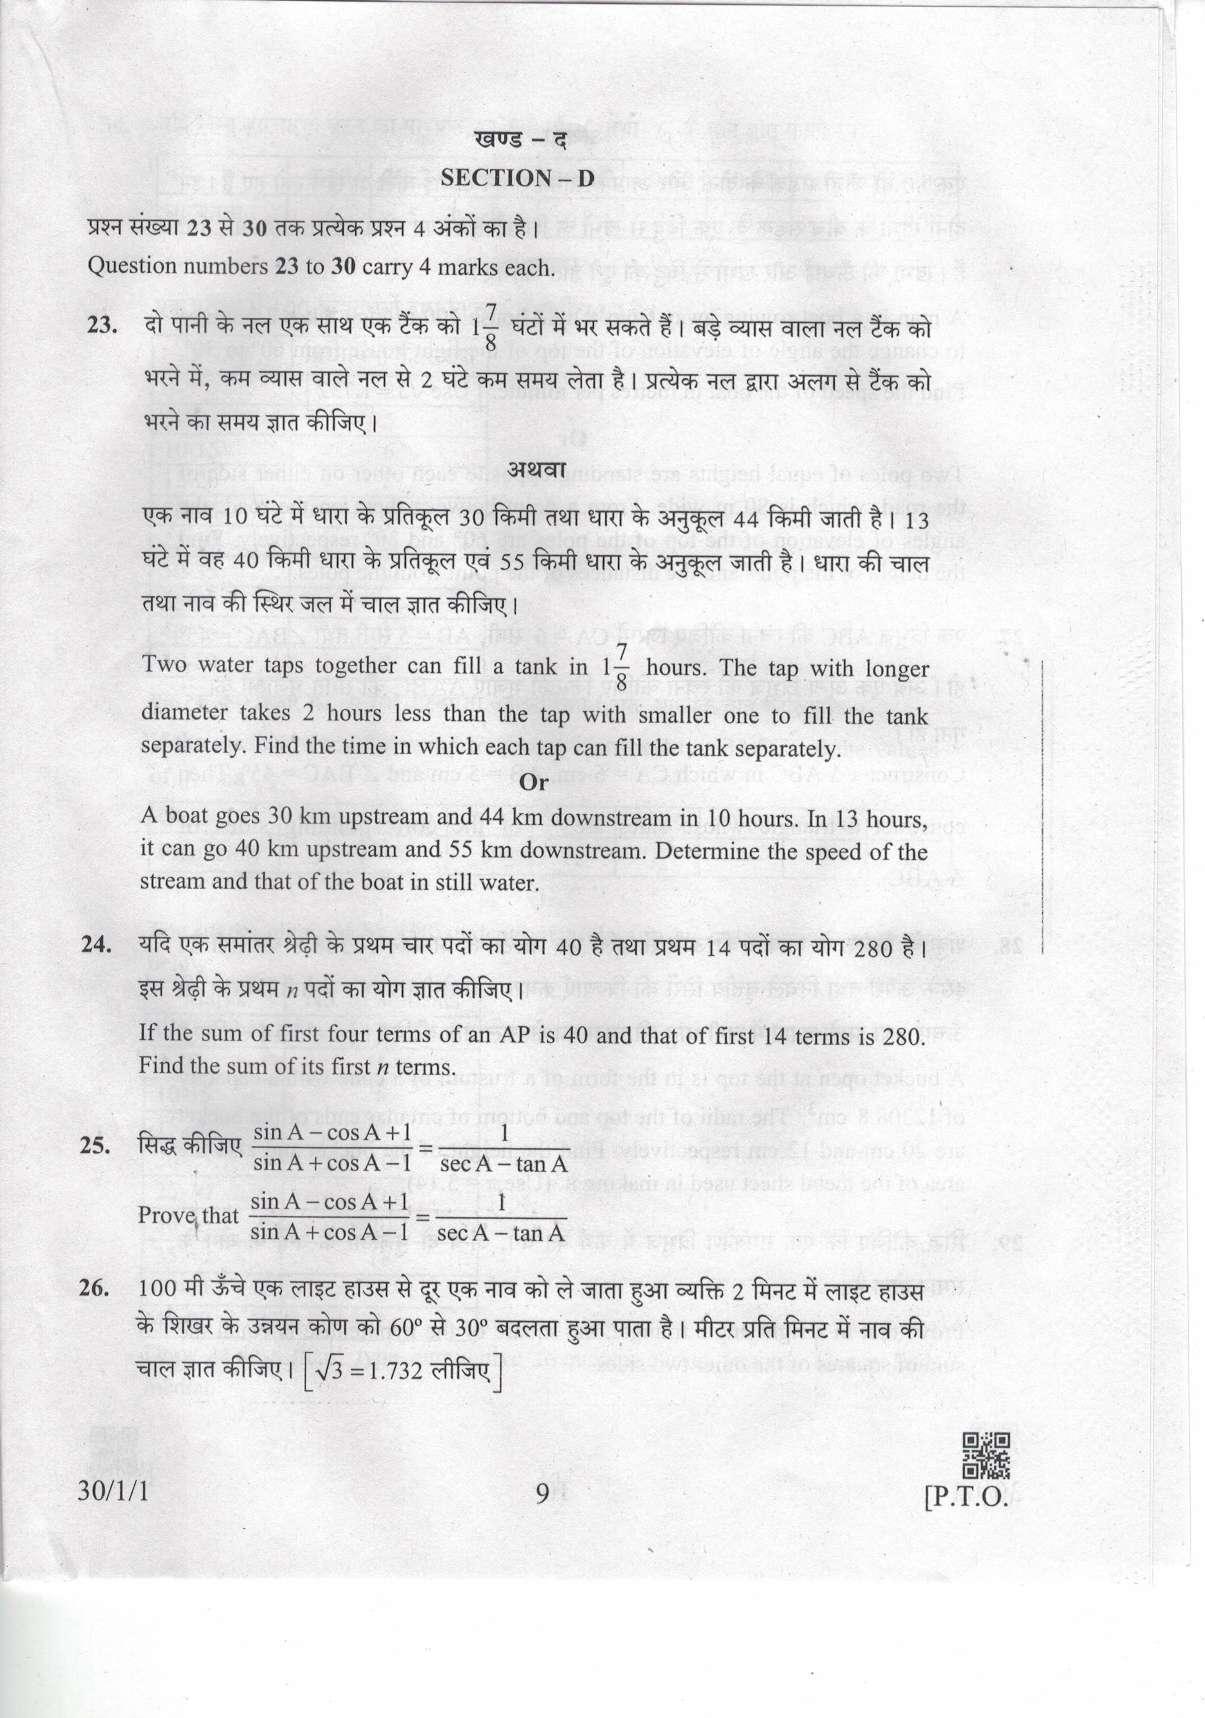 CBSE Class 10 30-1-1 Mathematics 2019 Question Paper - Page 9